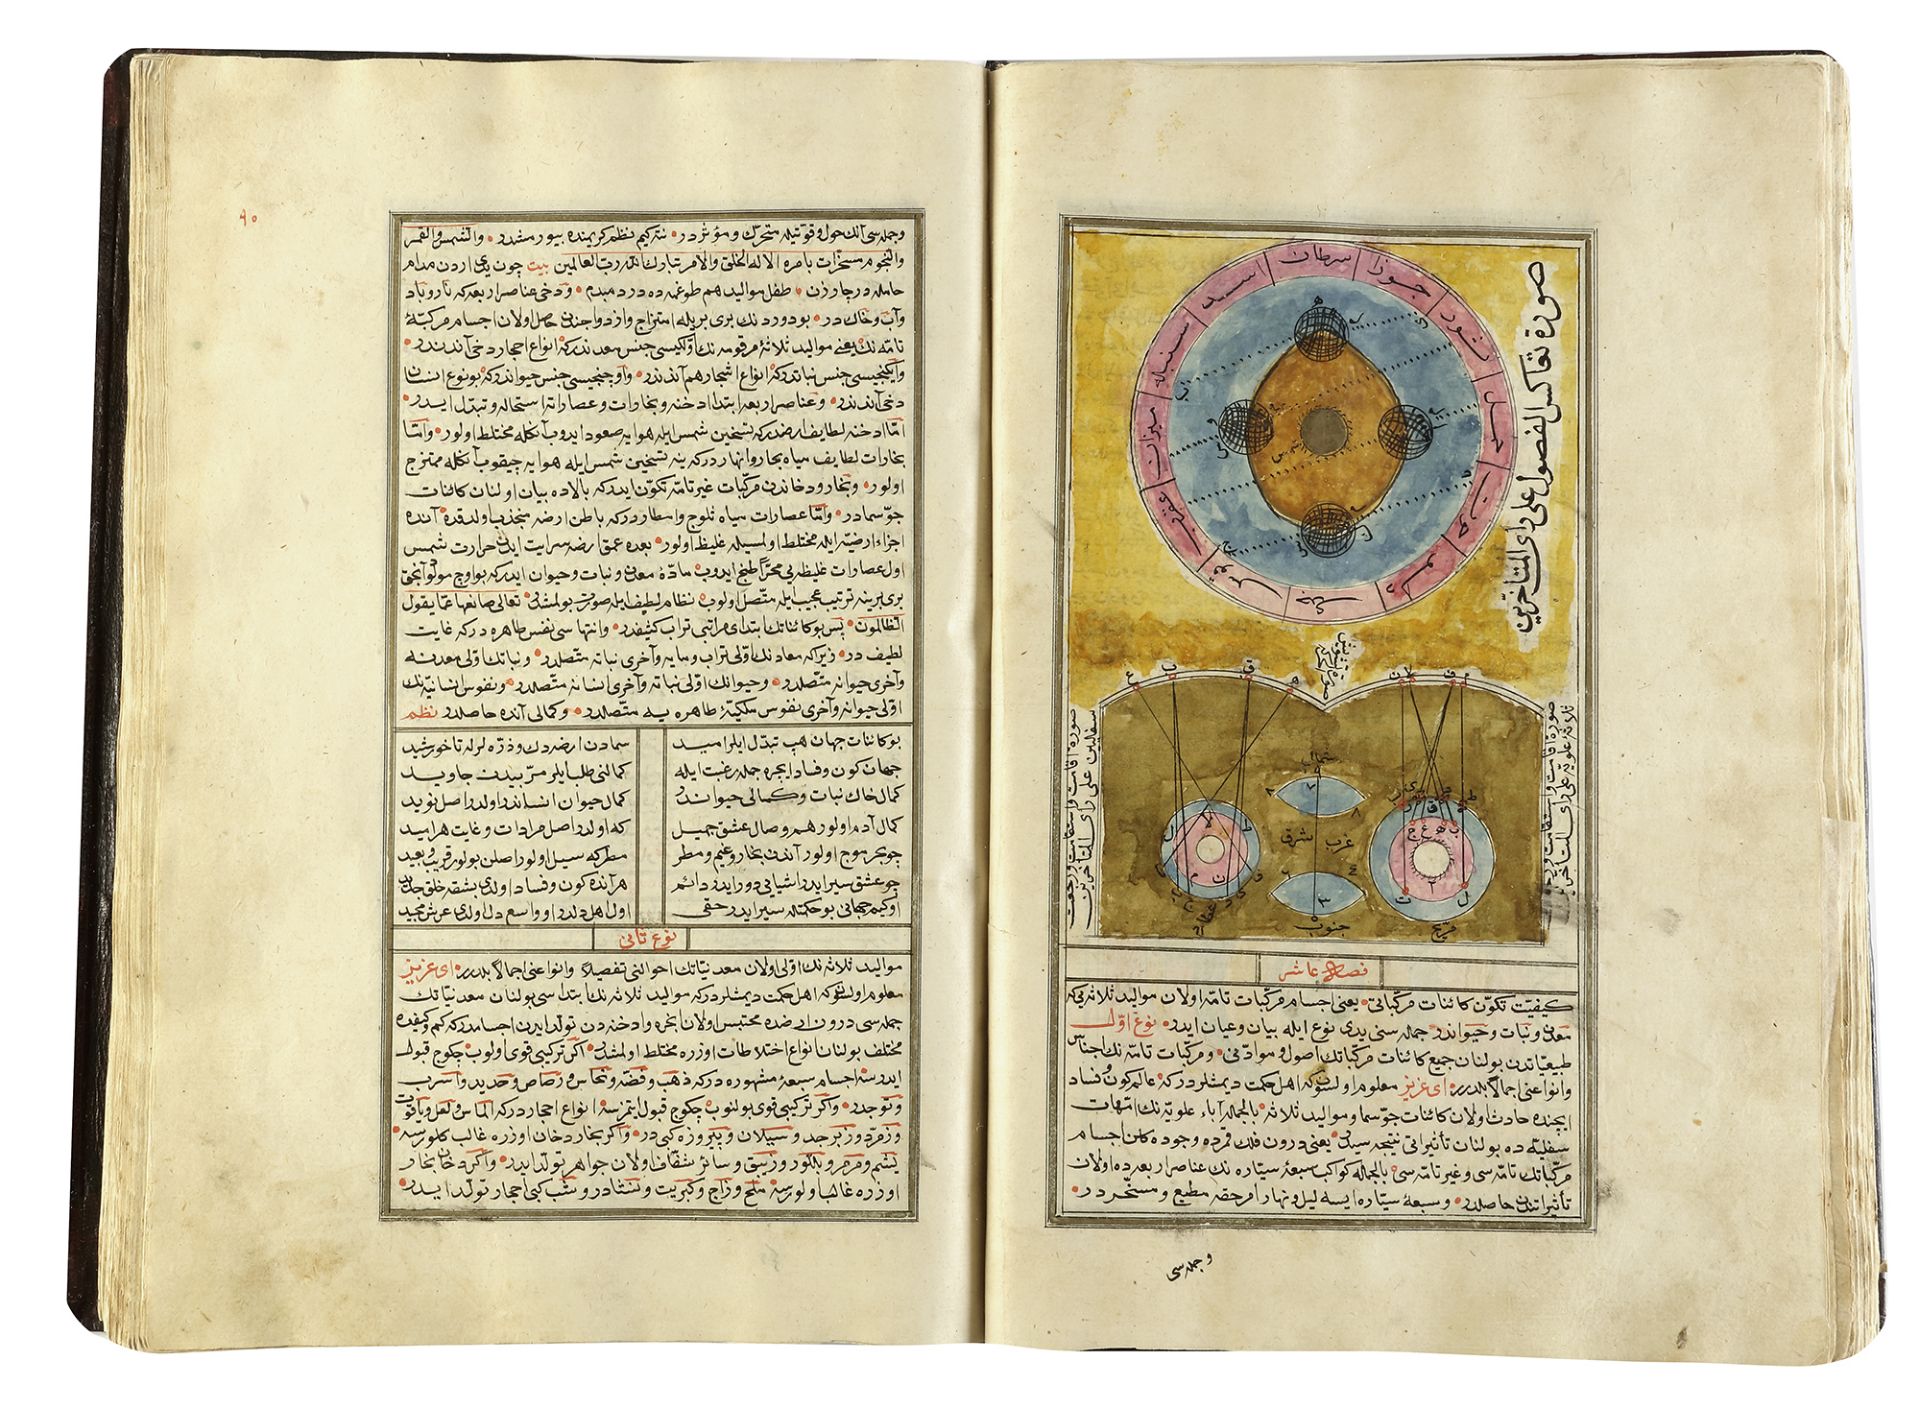 MARIFETNAME, IBRAHIM HAKKI, COPIED BY SAE'D ALLAH BIN ALI BIN AHMED, TURKEY, 1221 AH/1806 AD - Image 50 of 58